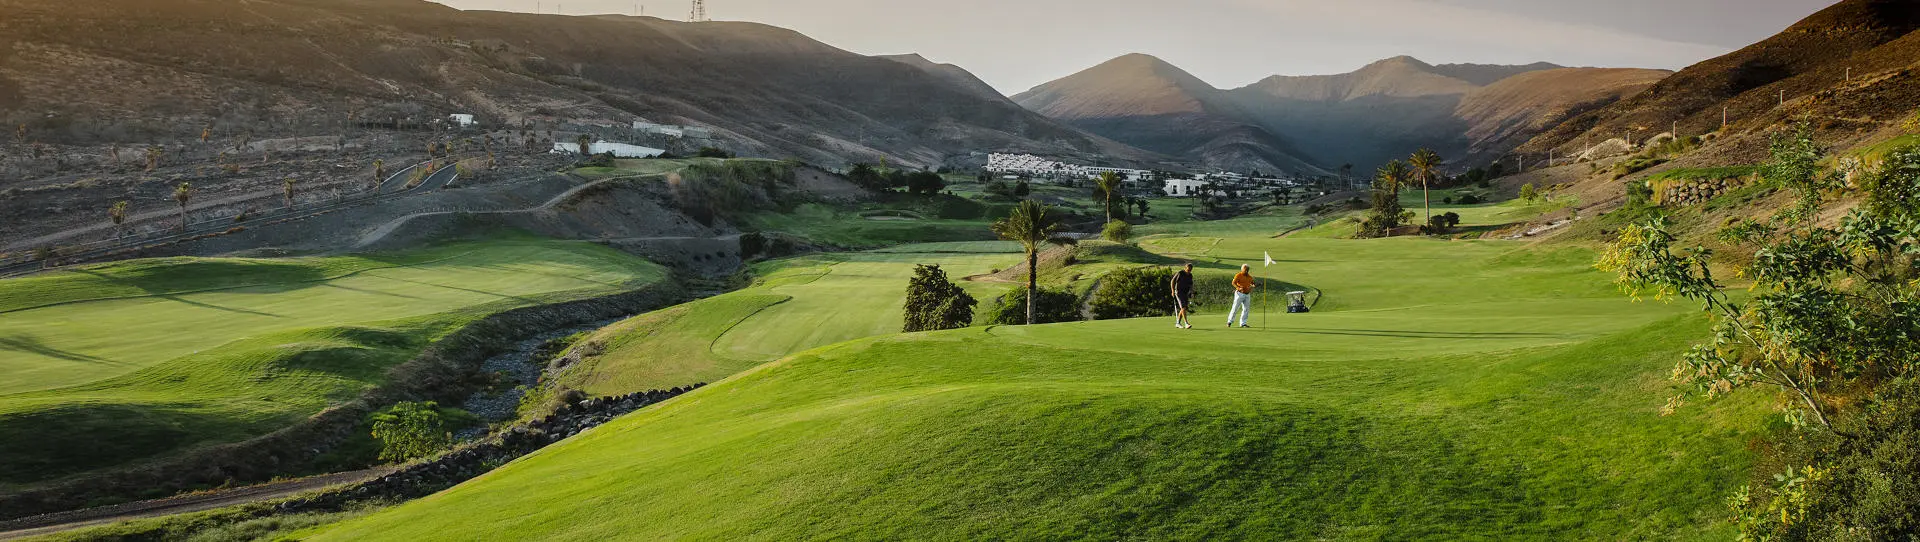 Spain golf courses - Jandía Golf Course - Photo 2